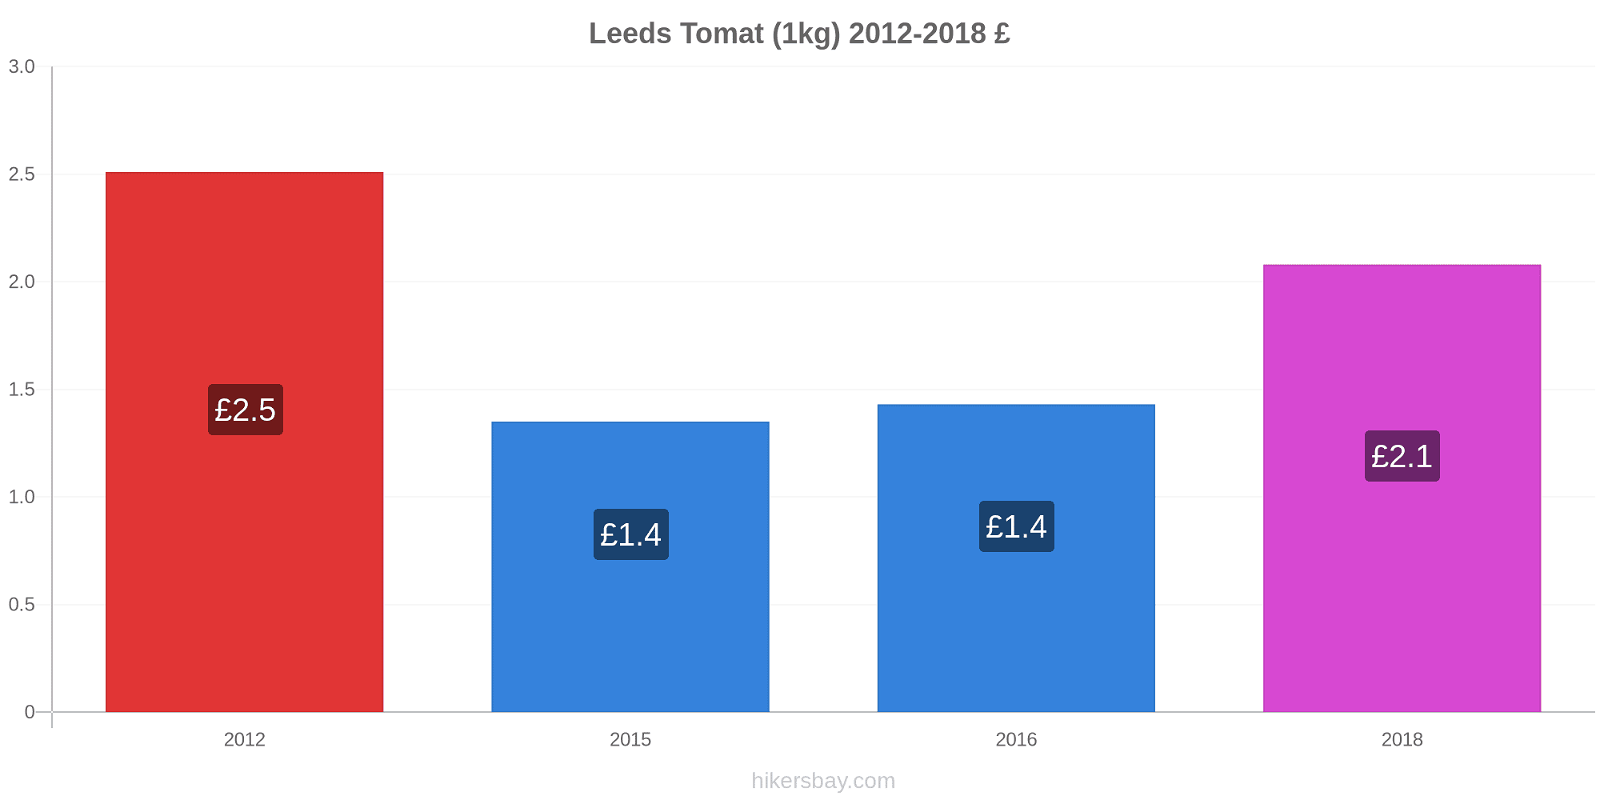 Leeds perubahan harga Tomat (1kg) hikersbay.com